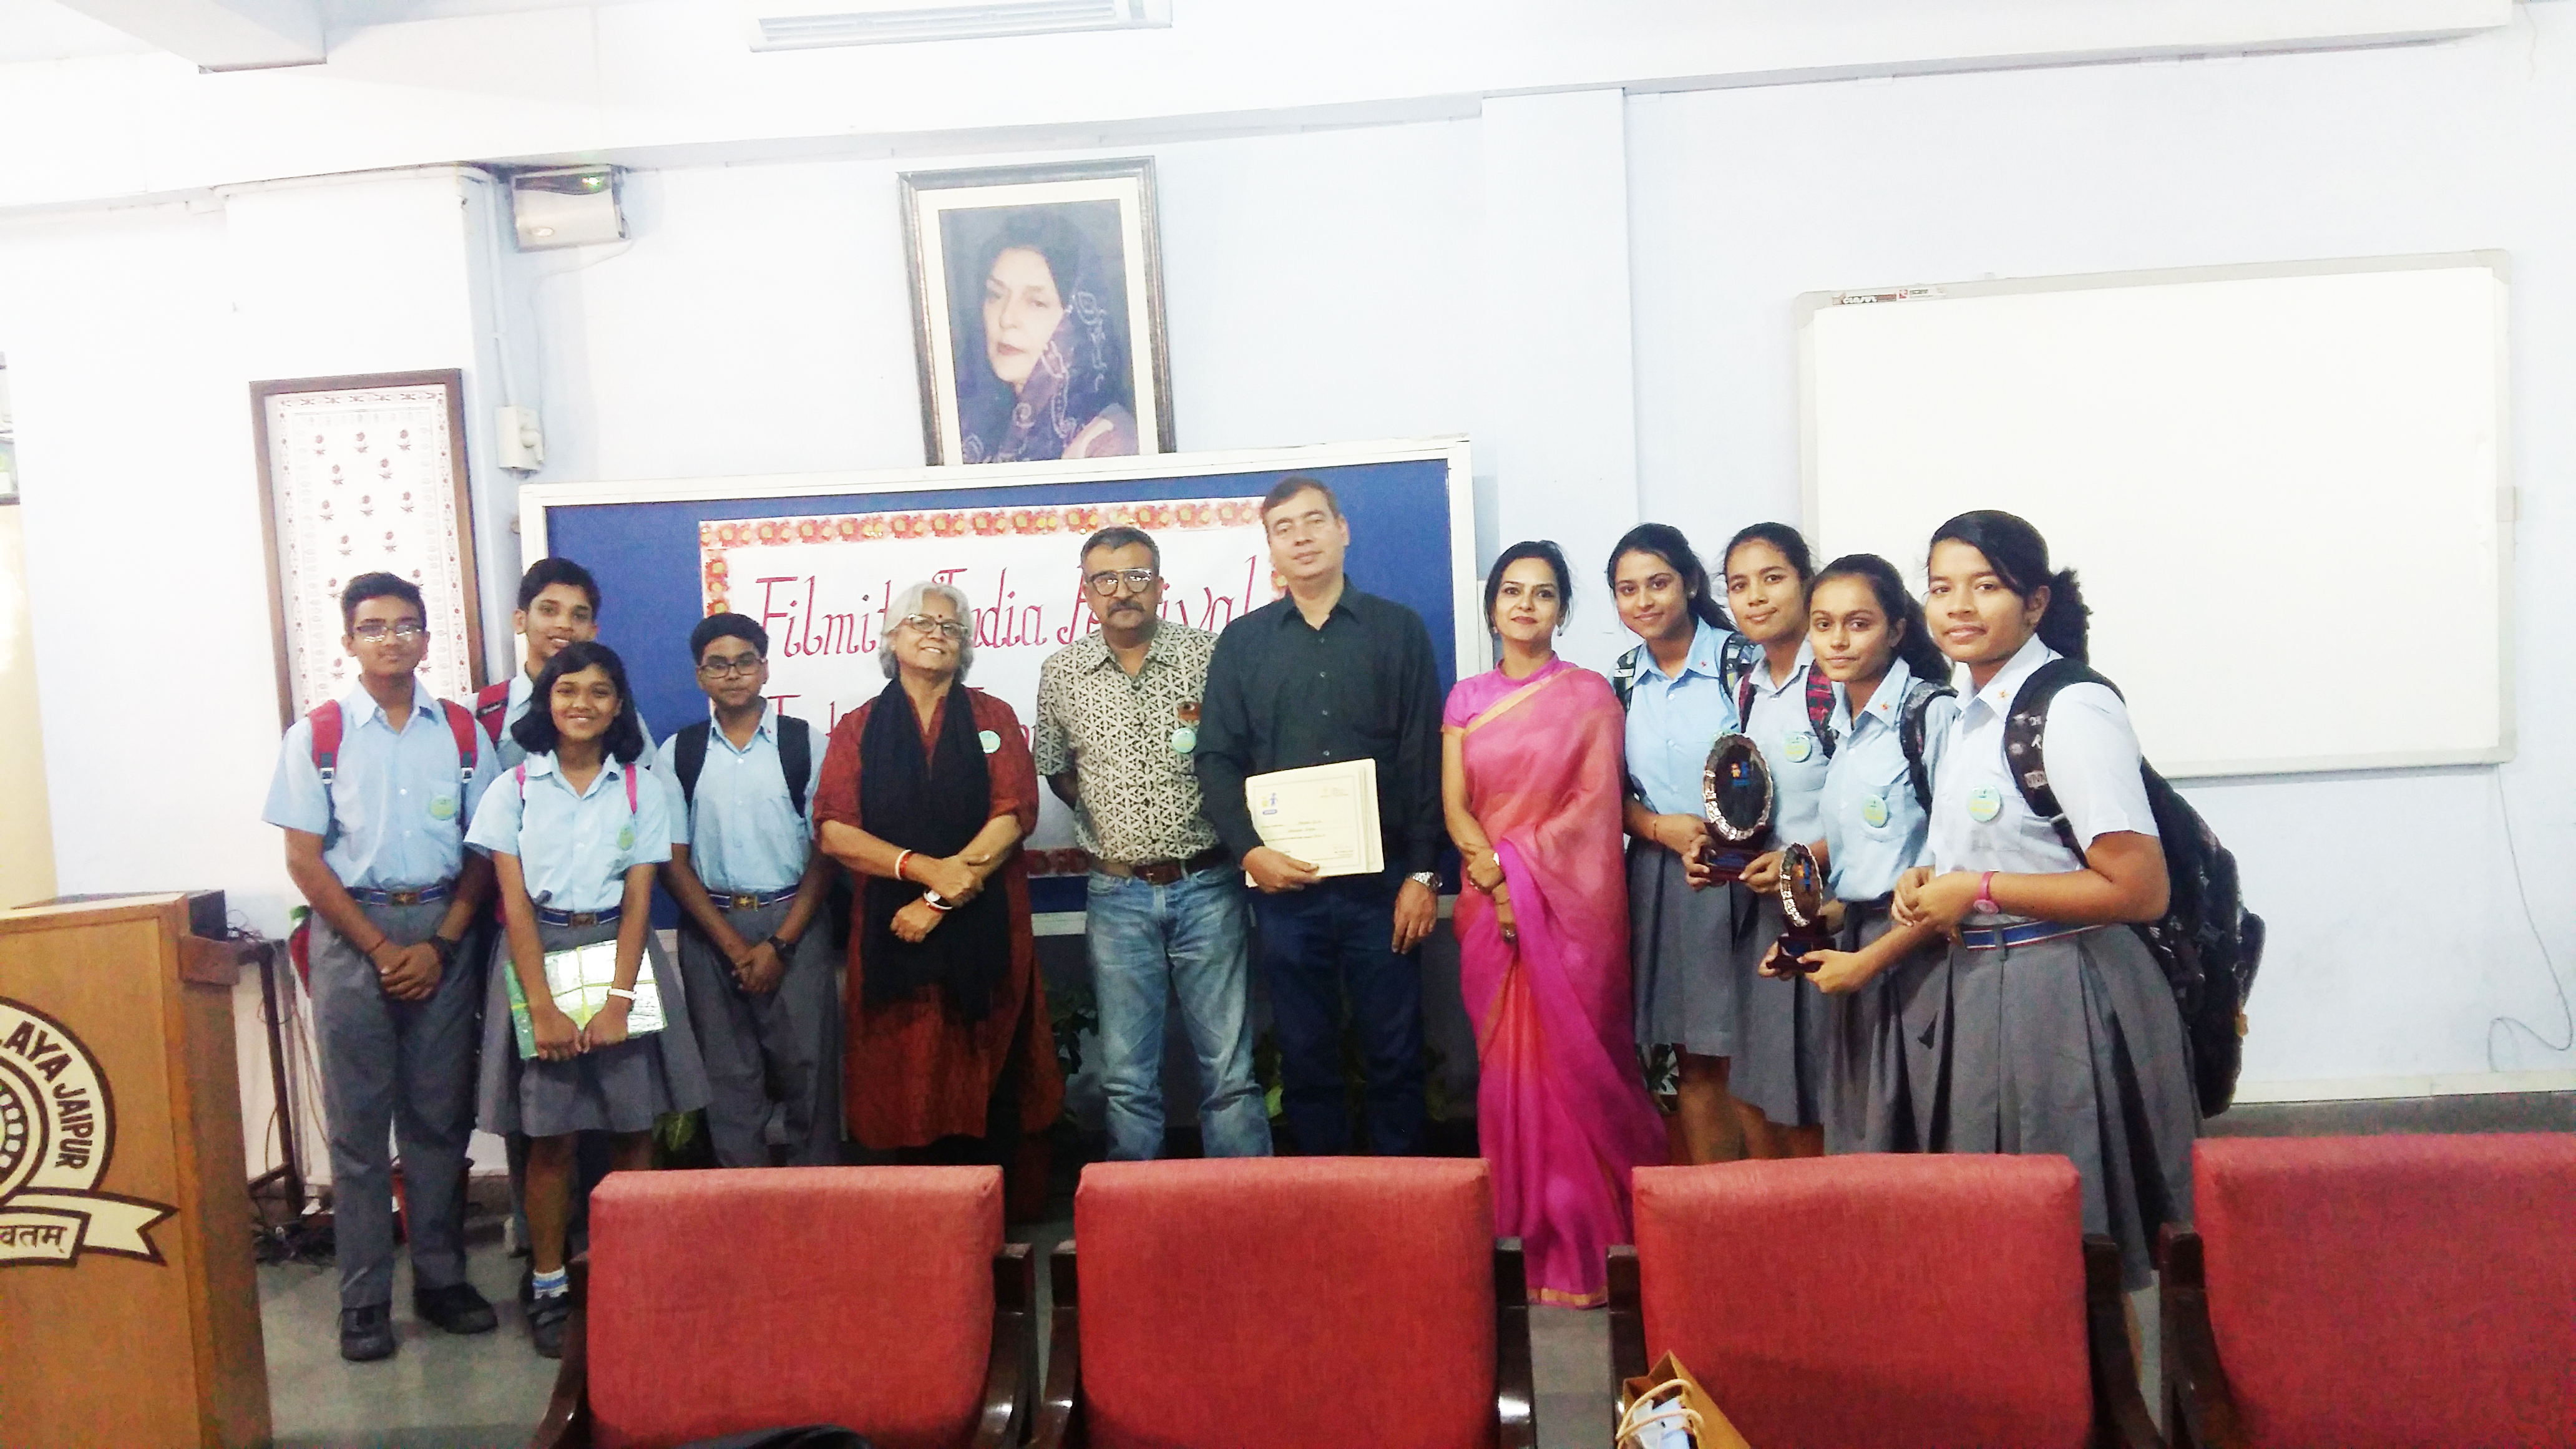 Sanskar Students shine at Filmit India Film Festival 2018